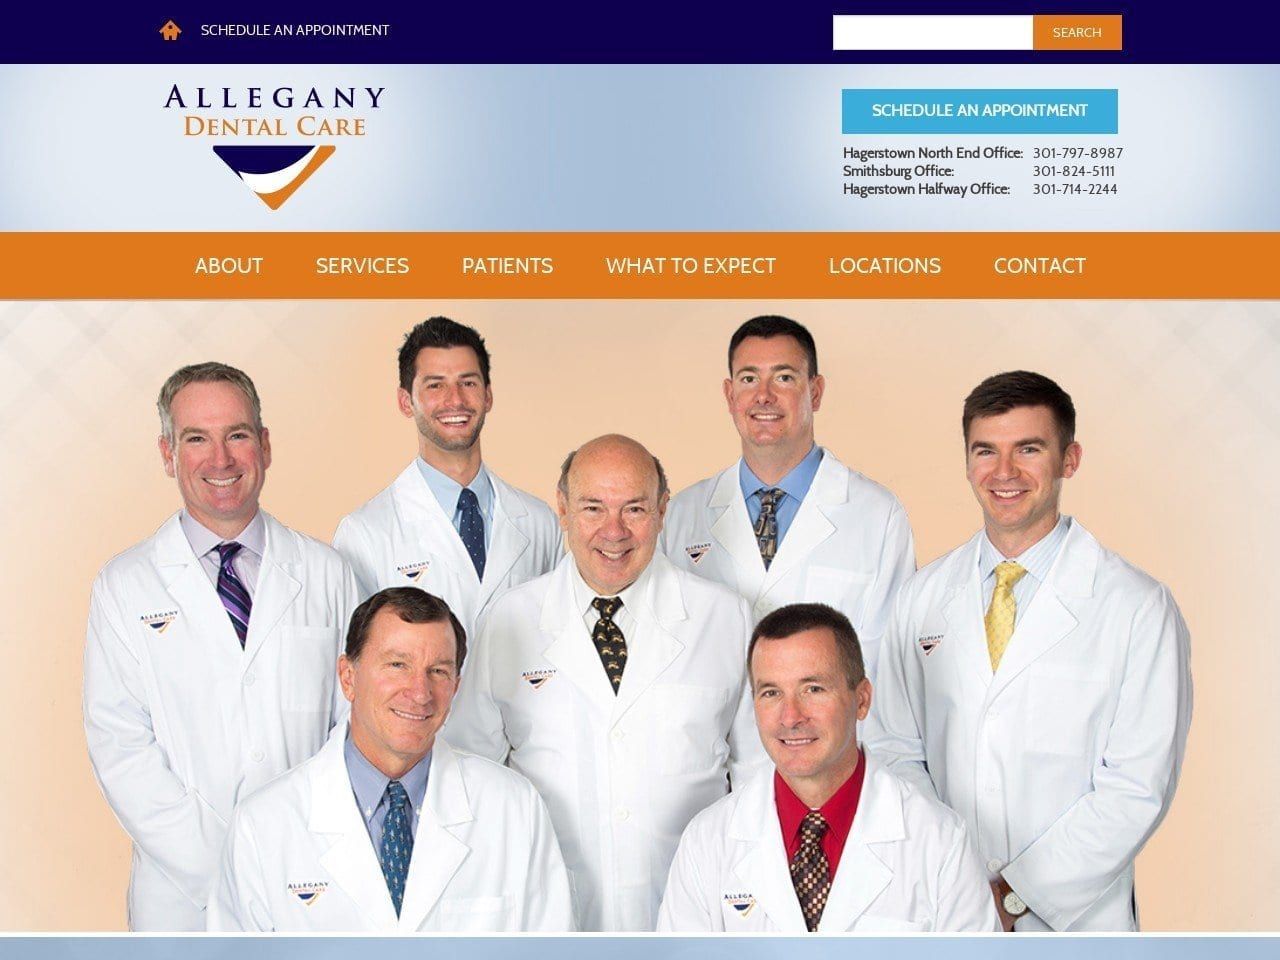 Allegany Dental Care Beachley Edward R DDS Website Screenshot from alleganydentalcare.com